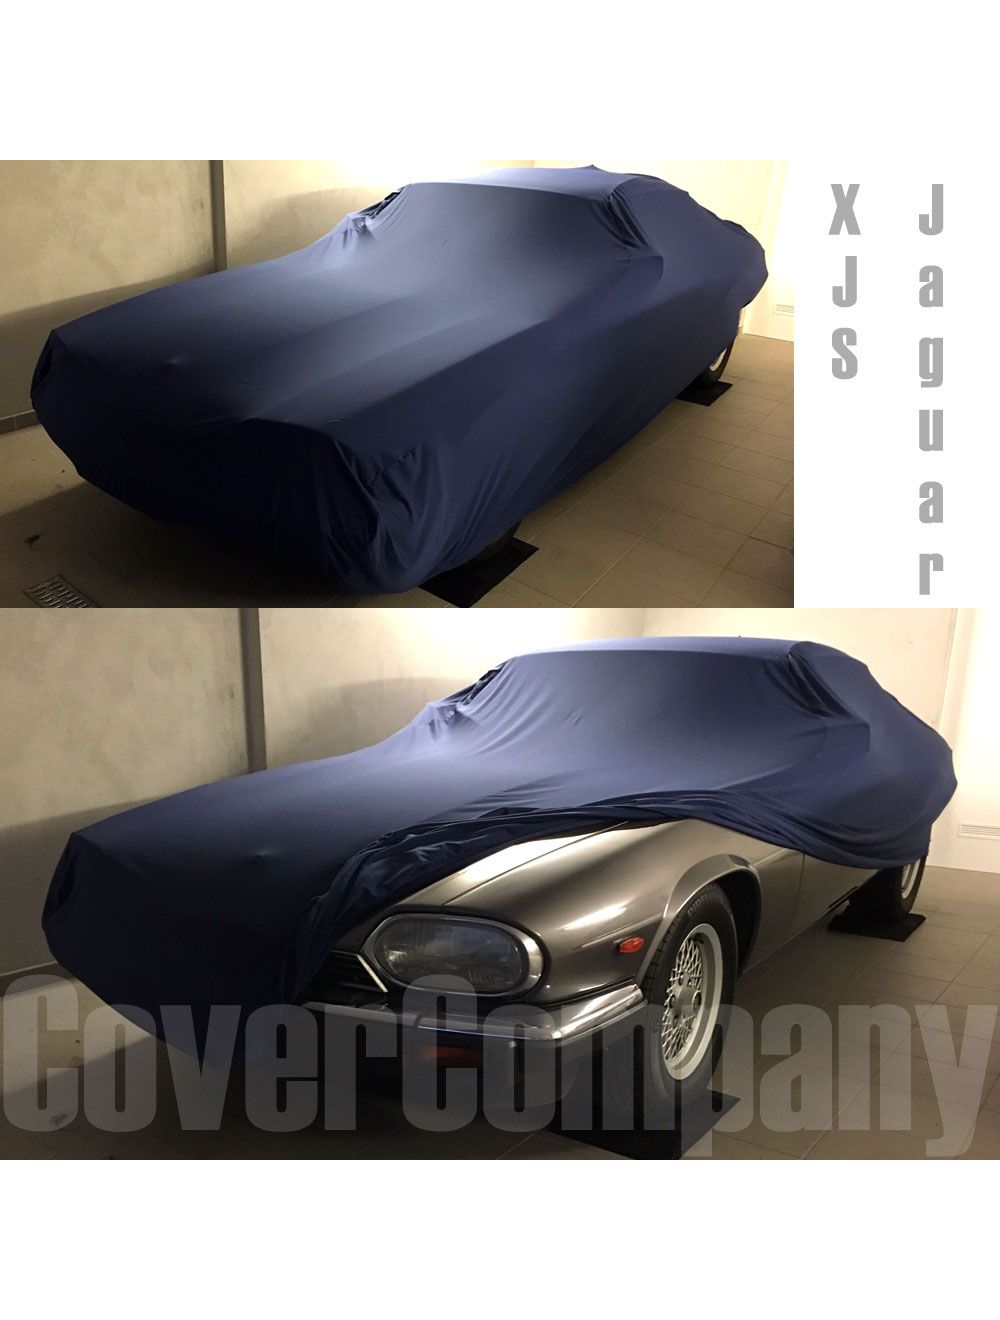 Jaguar XJ Car Cover - Best Car Cover for Jaguar XJ